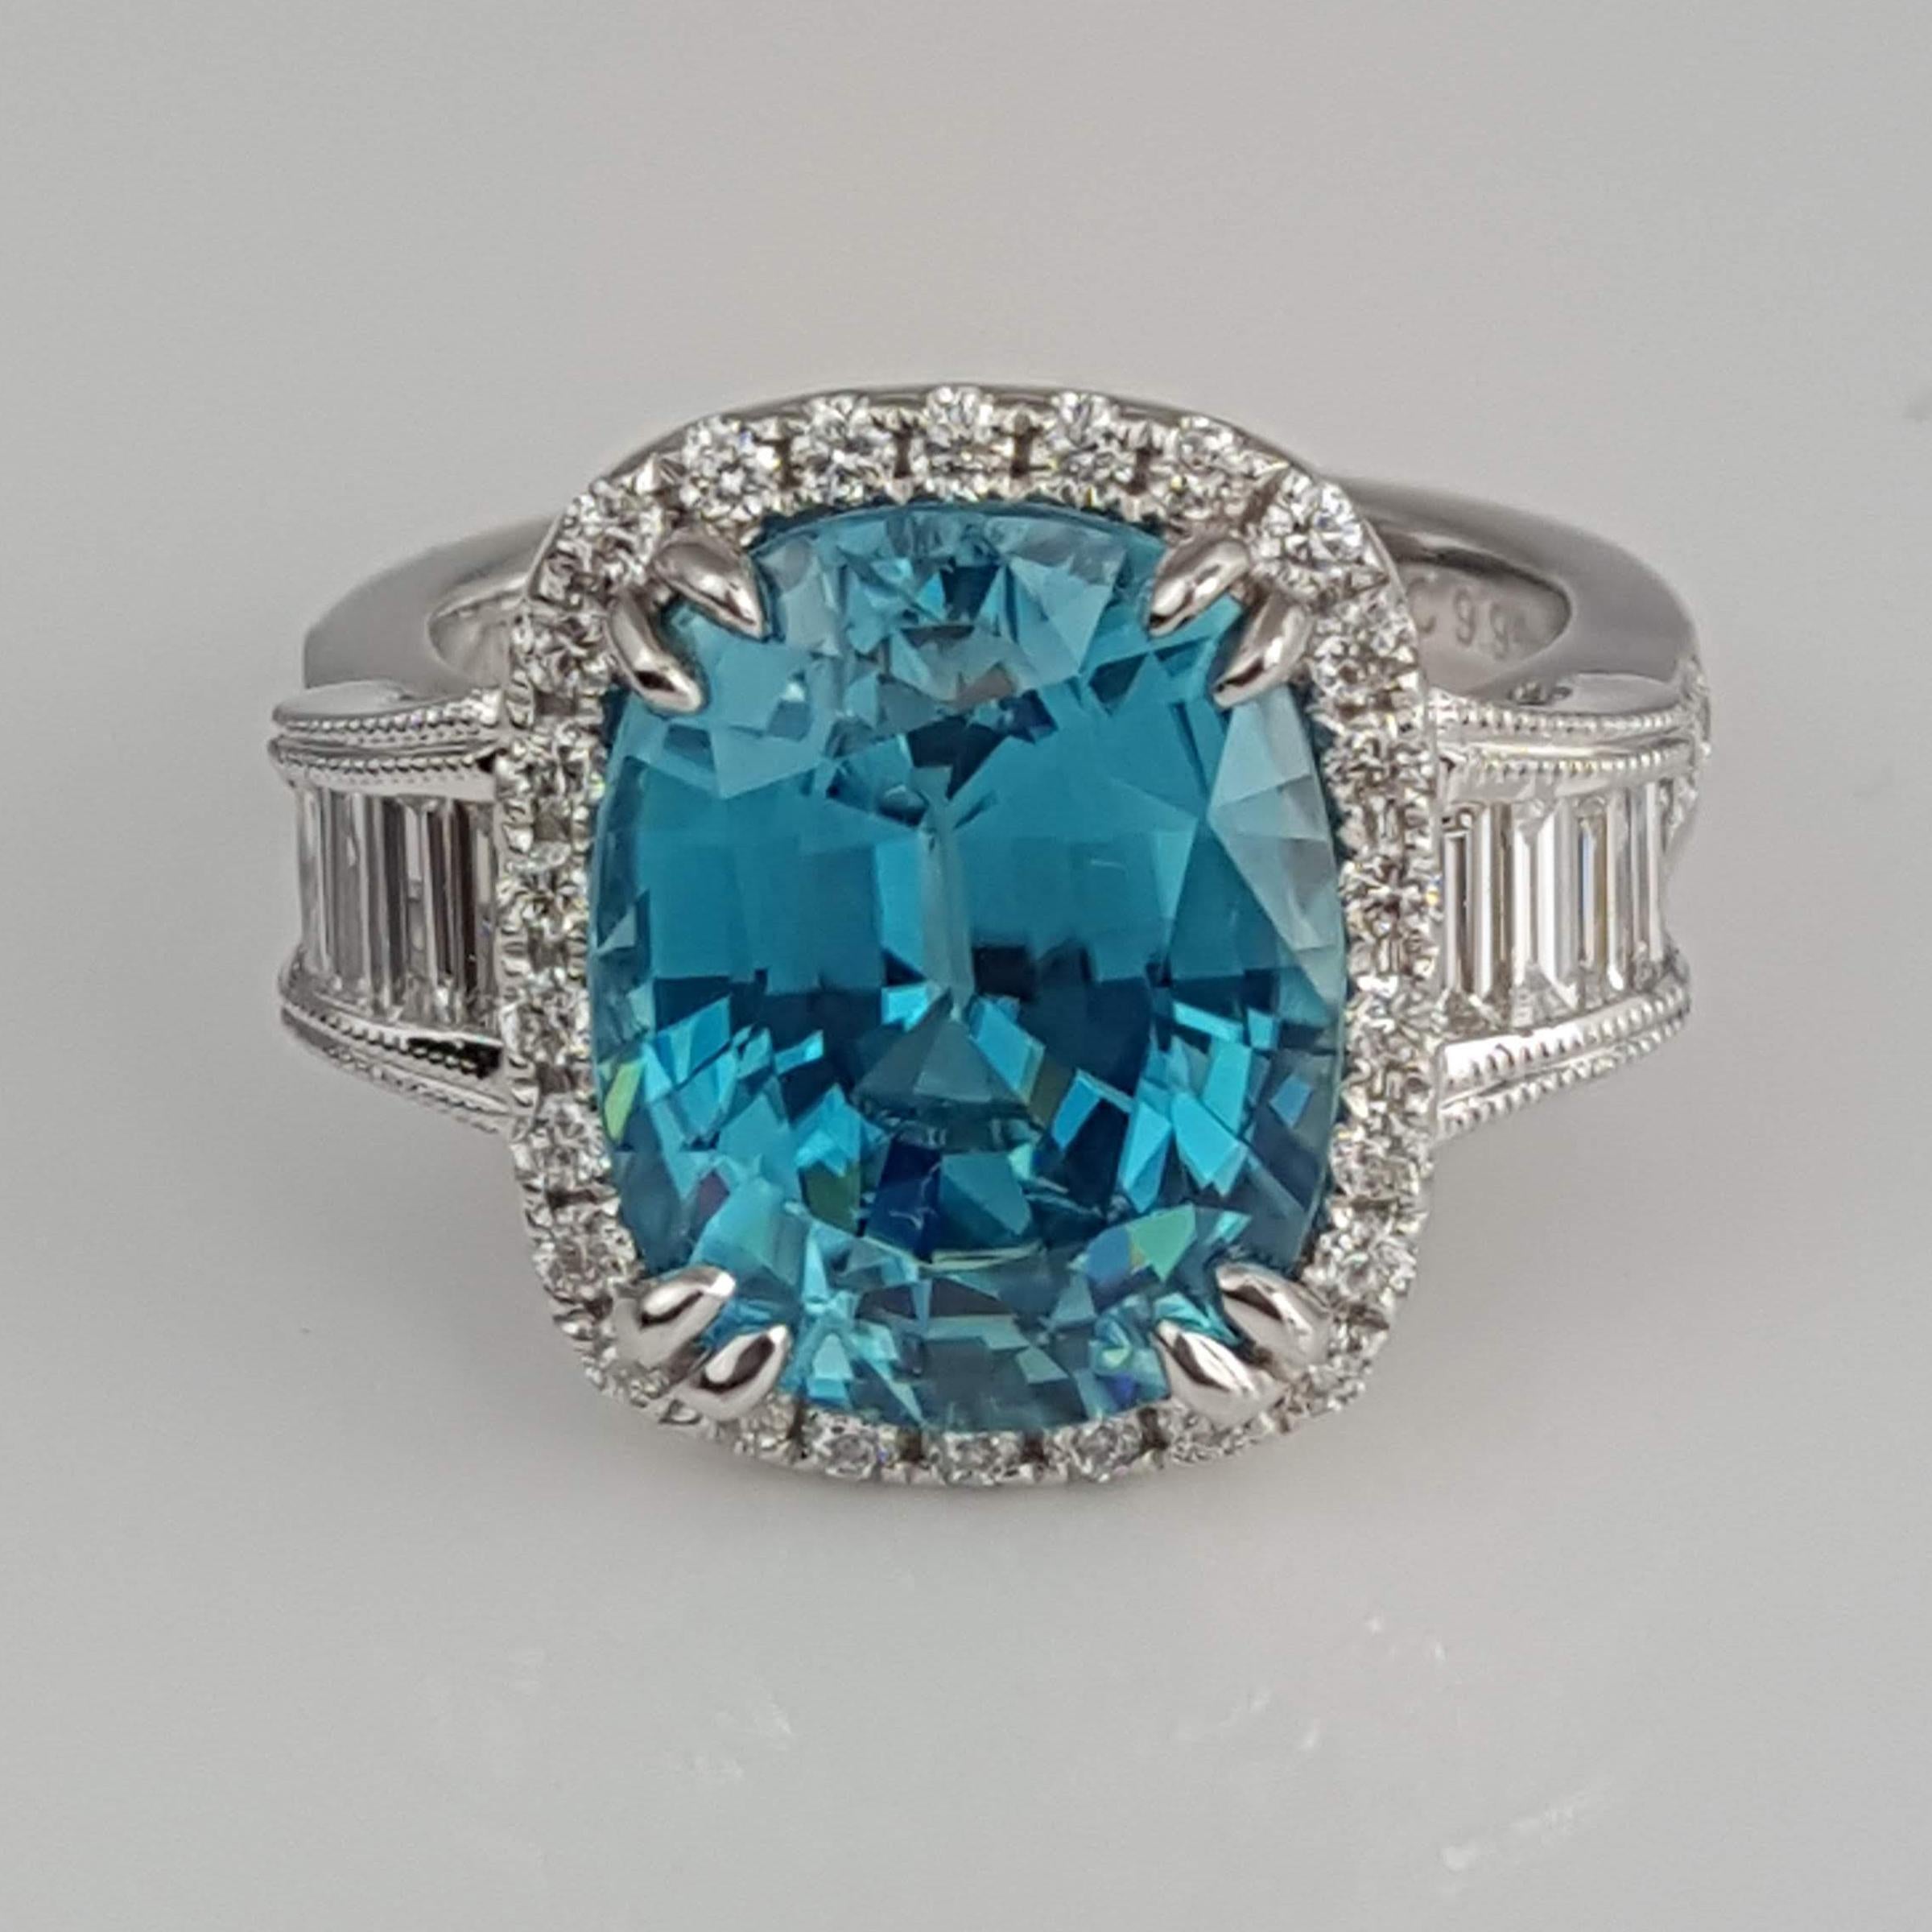 Contemporary DiamondTown 9.95 Carat Oval Cut Blue Zircon and 0.74 Carat Diamond Ring